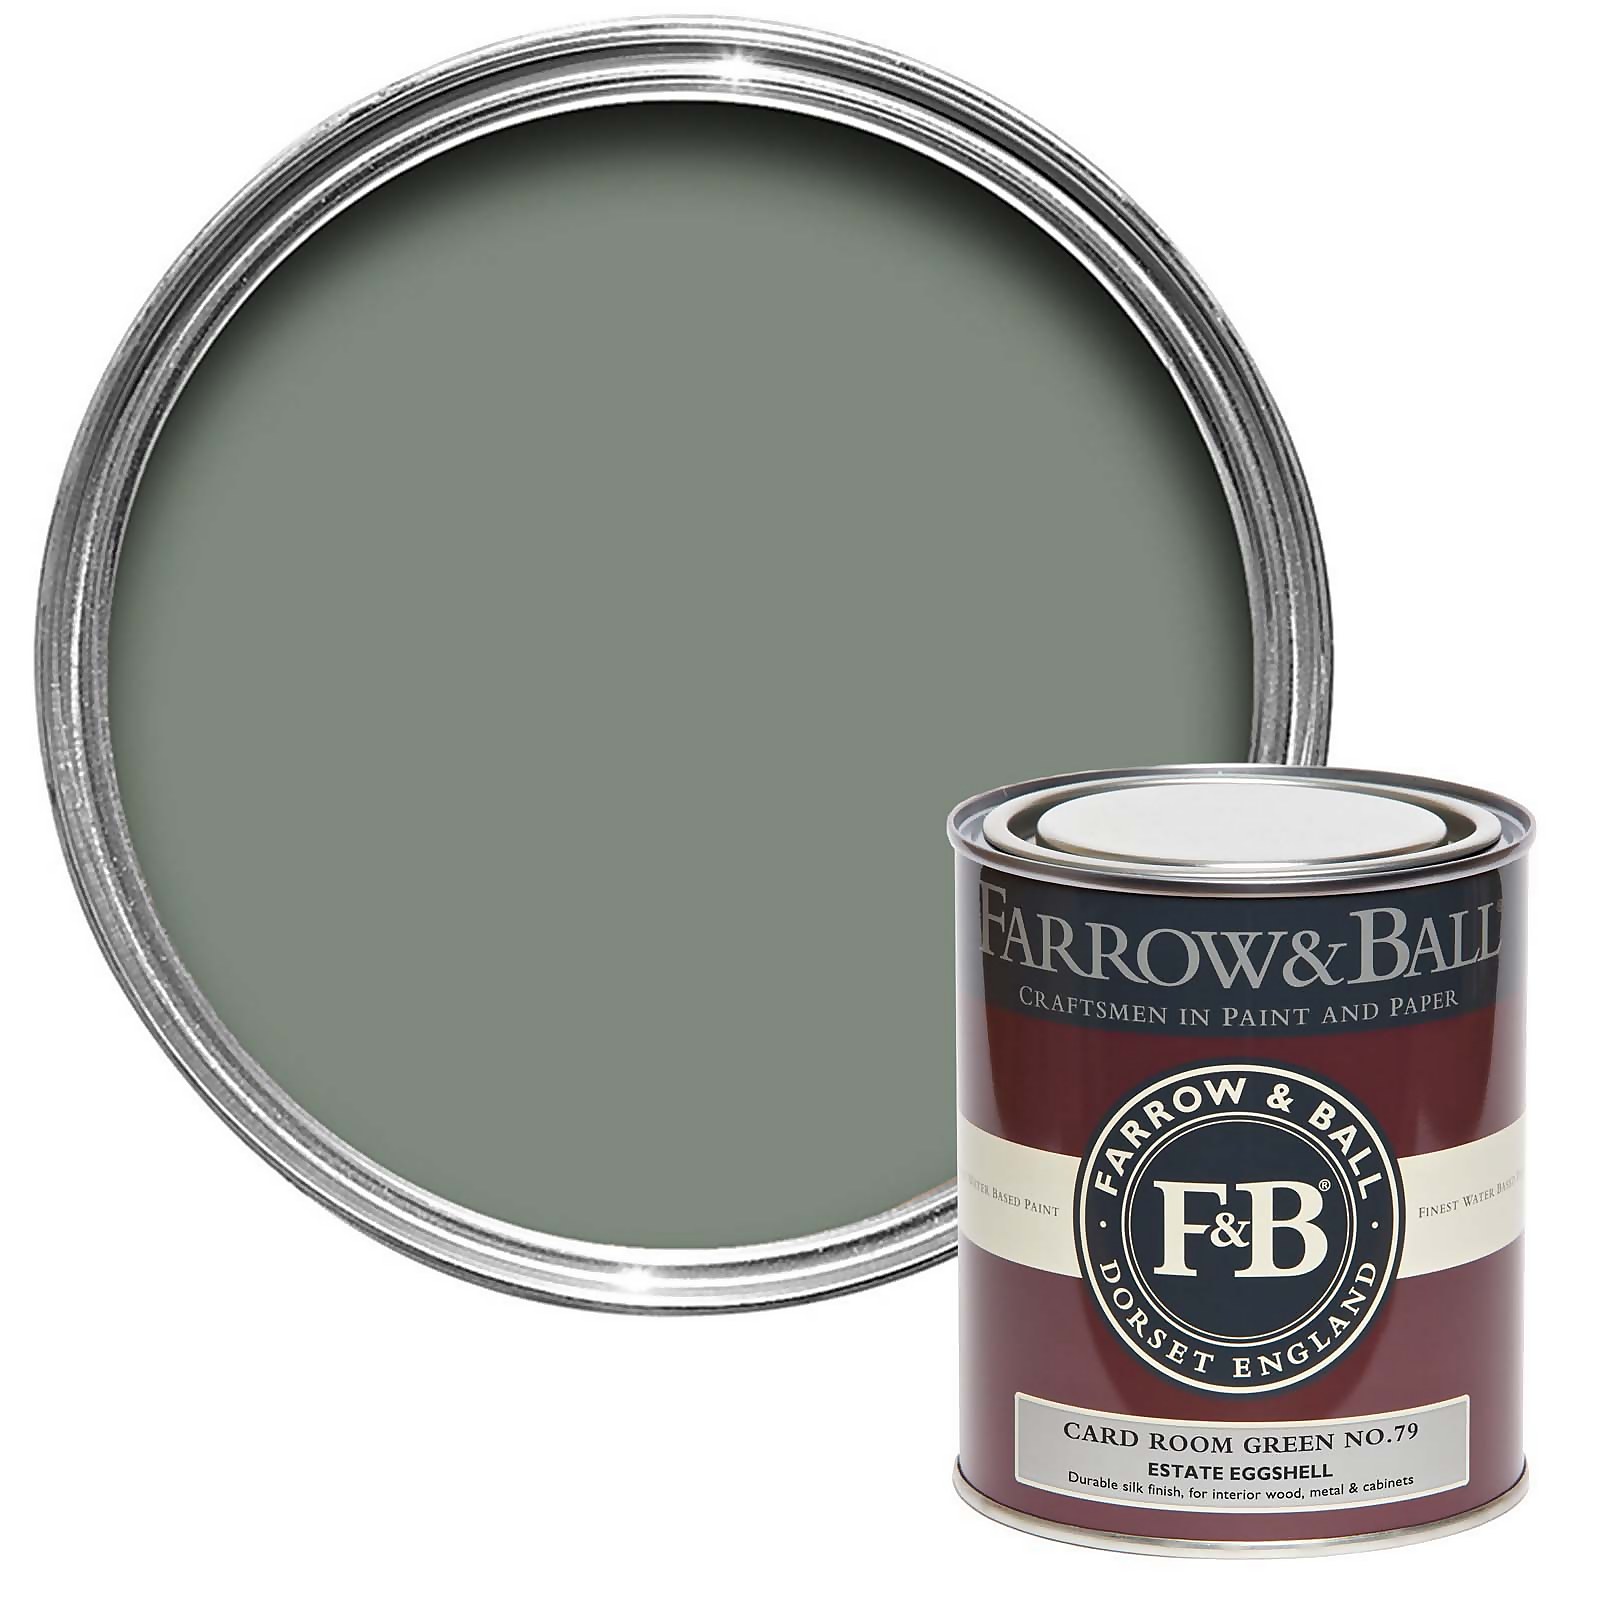 Farrow & Ball Estate Eggshell Paint No.79 Card Room Green No.79 - 750ml